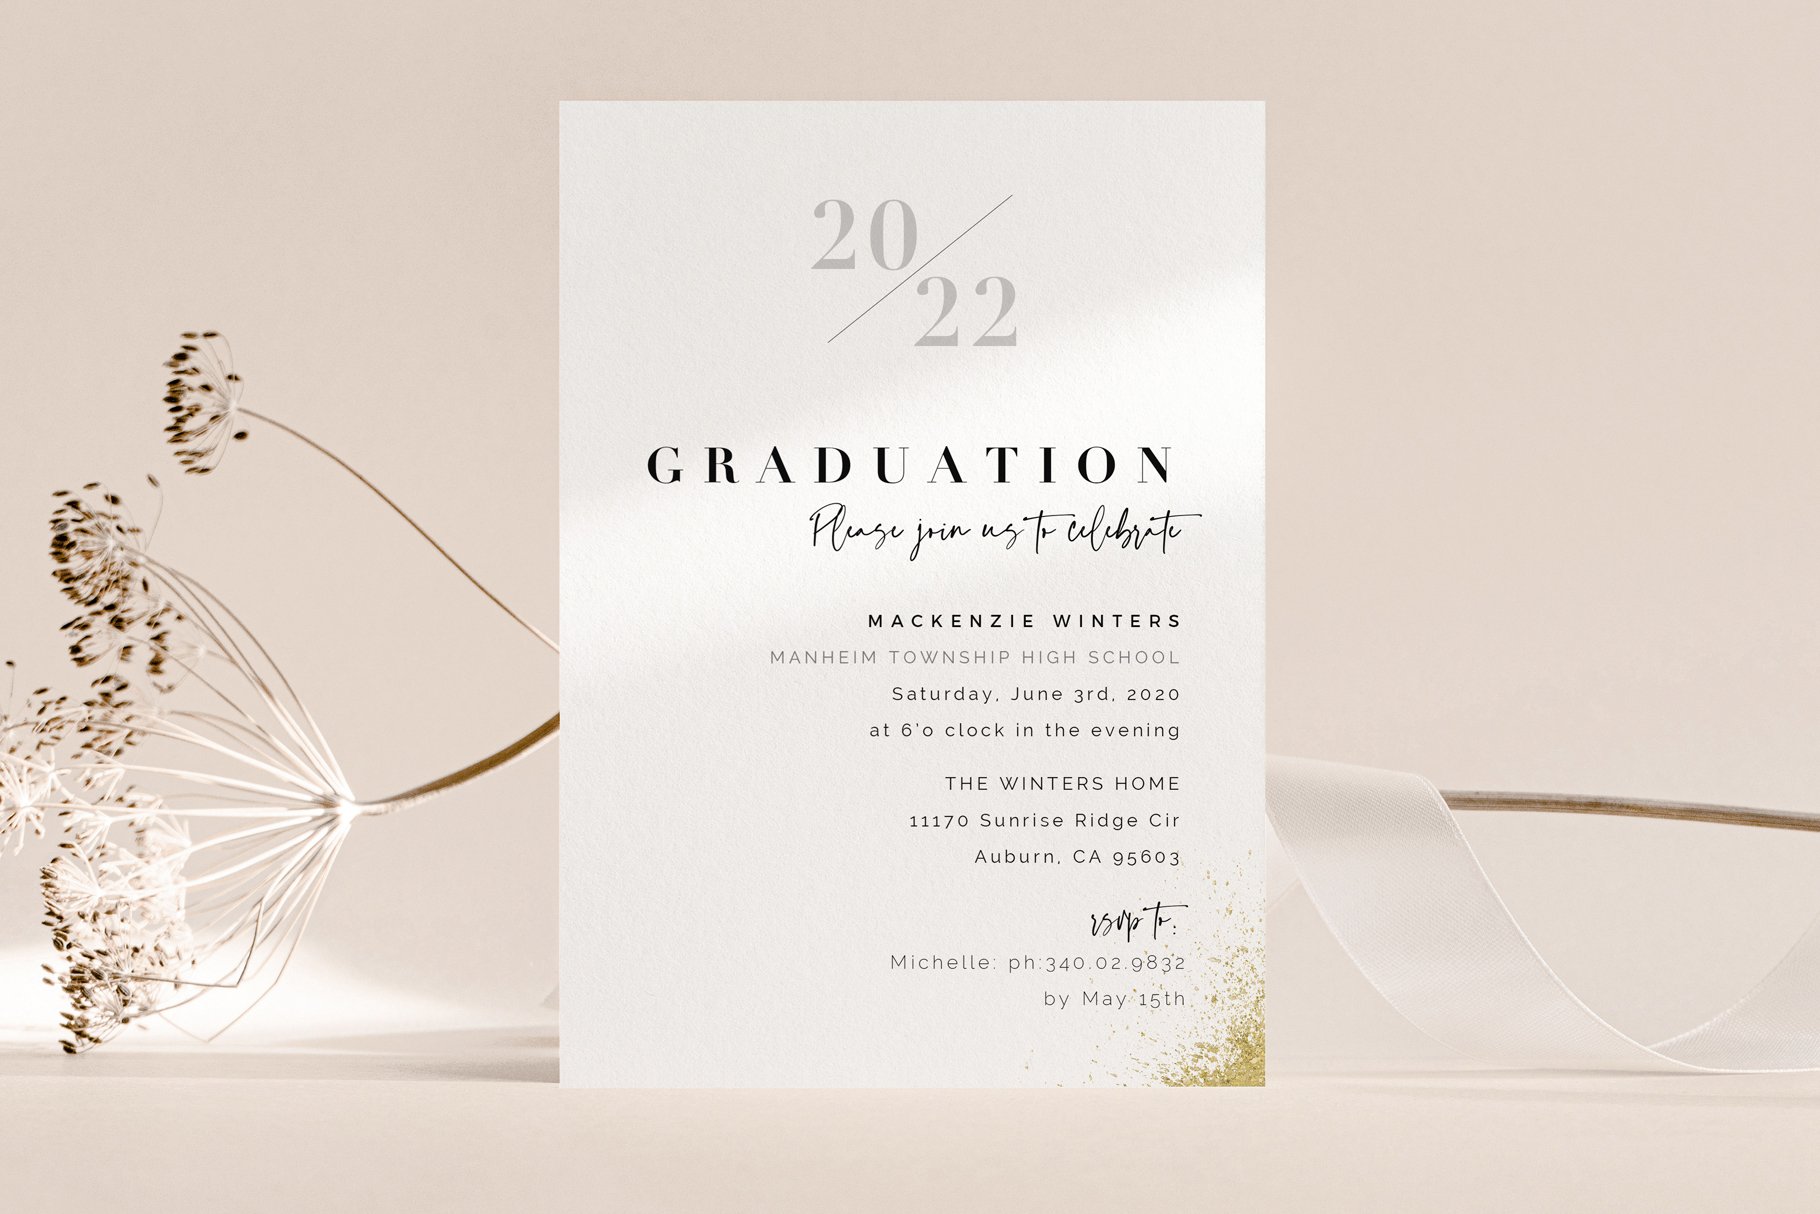 Graduation Party Invite for Canva cover image.